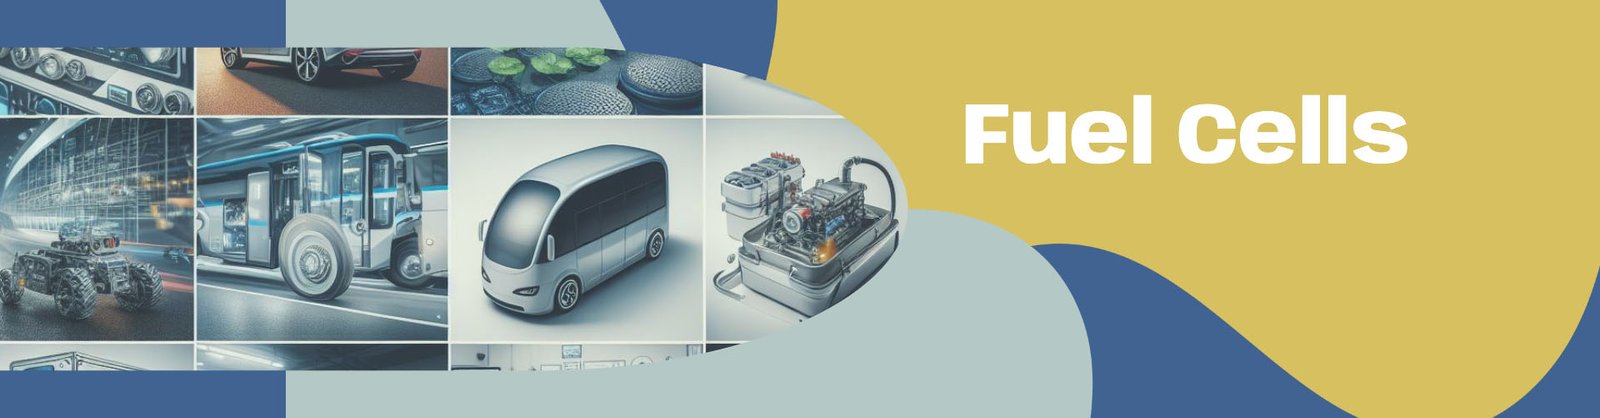 Fuel cells header image